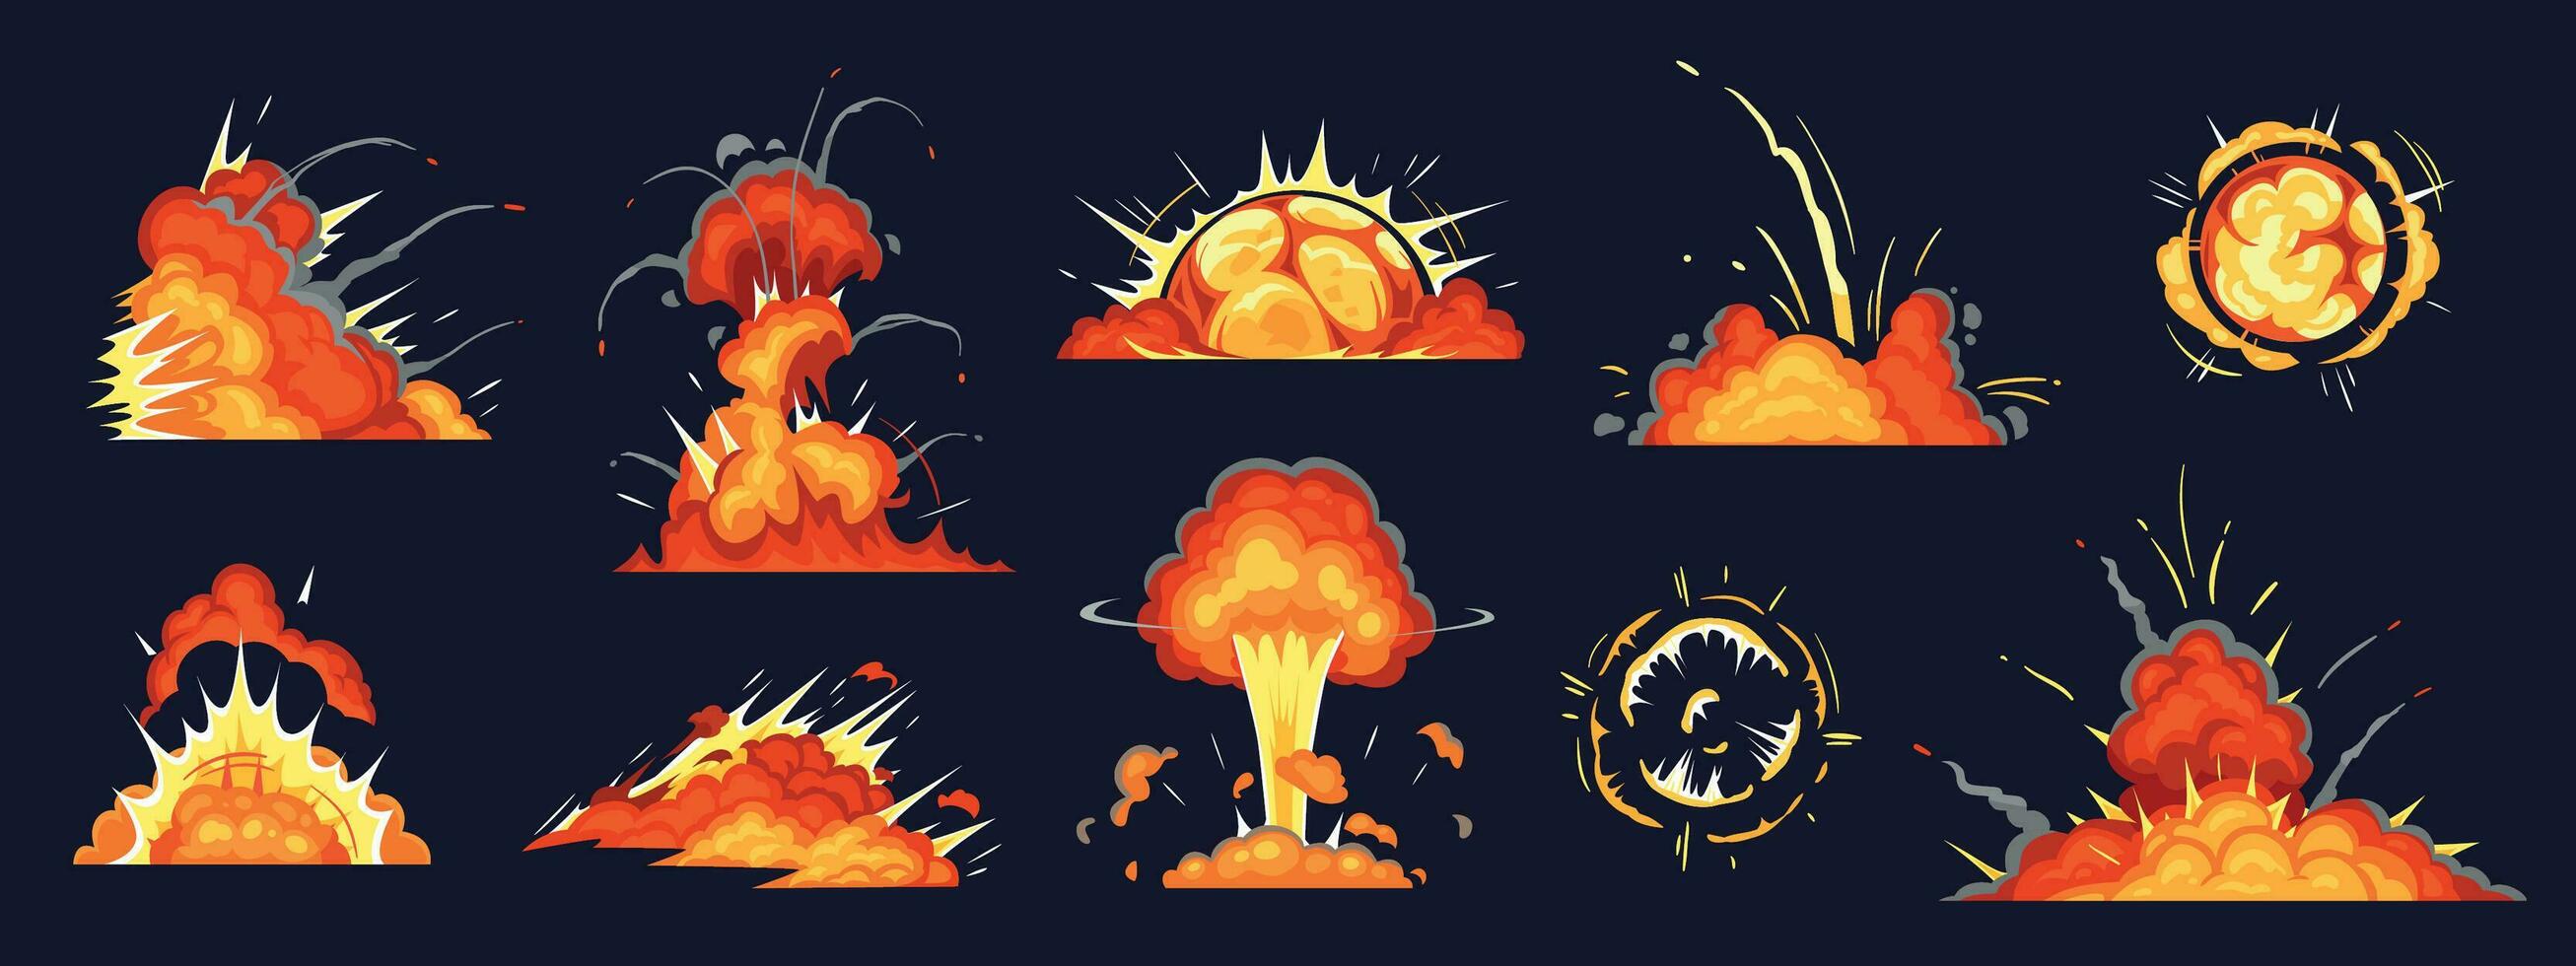 Karikatur Bombe Explosion. Dynamit Explosionen, Achtung explosiv Bombe Detonation und atomar Bomben Wolke Comics Vektor Illustration einstellen